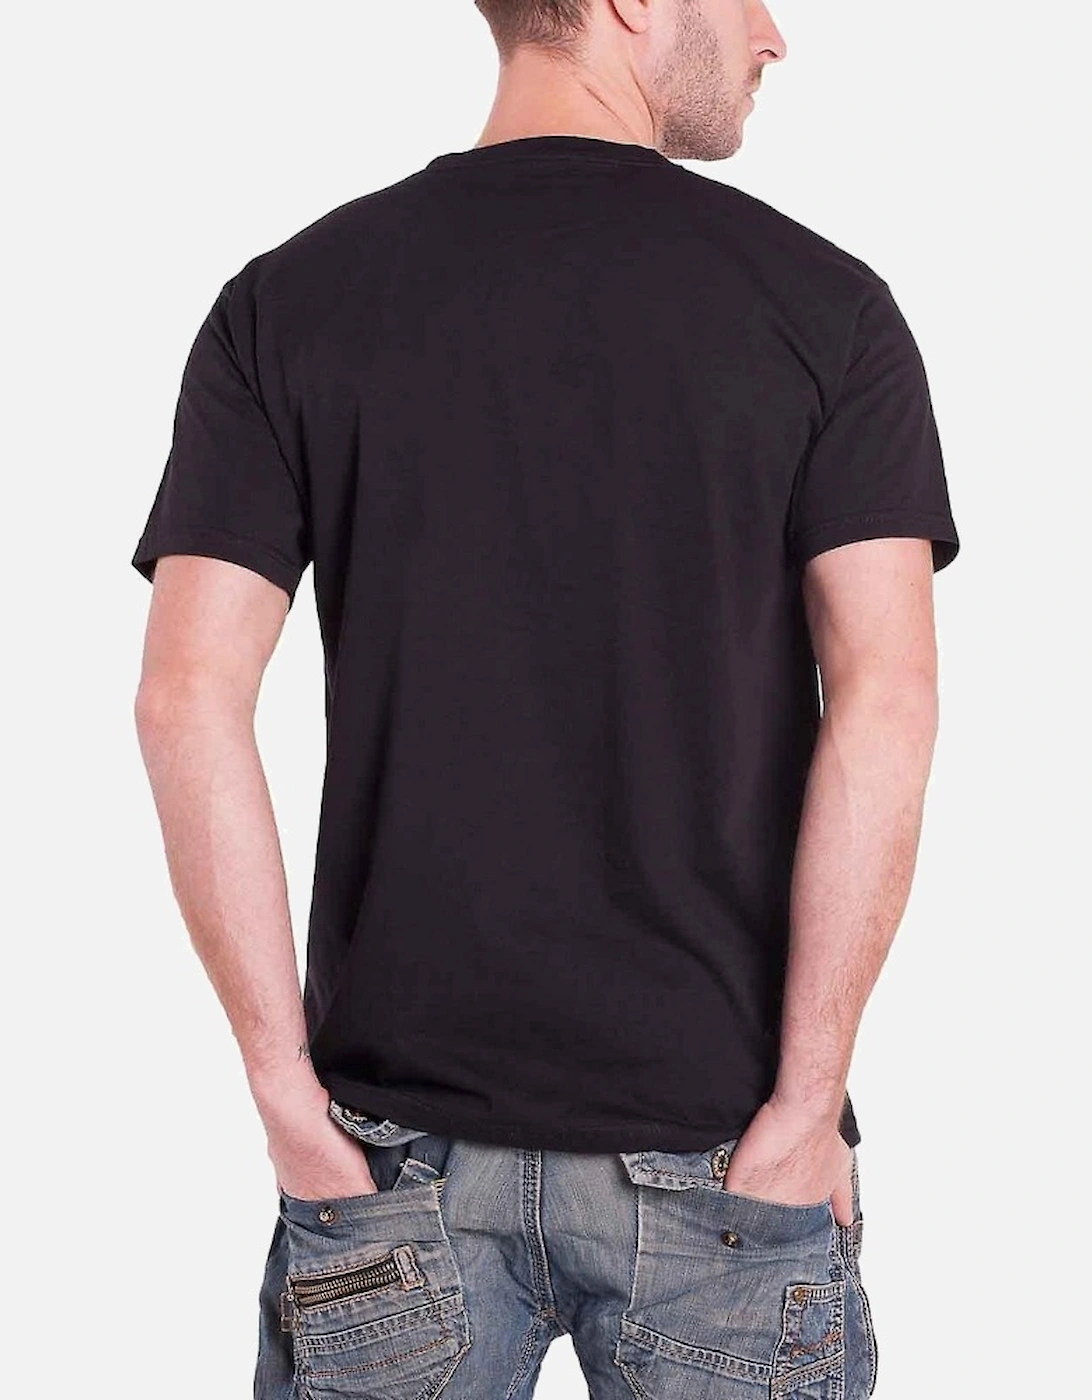 Unisex Adult Procession T-Shirt